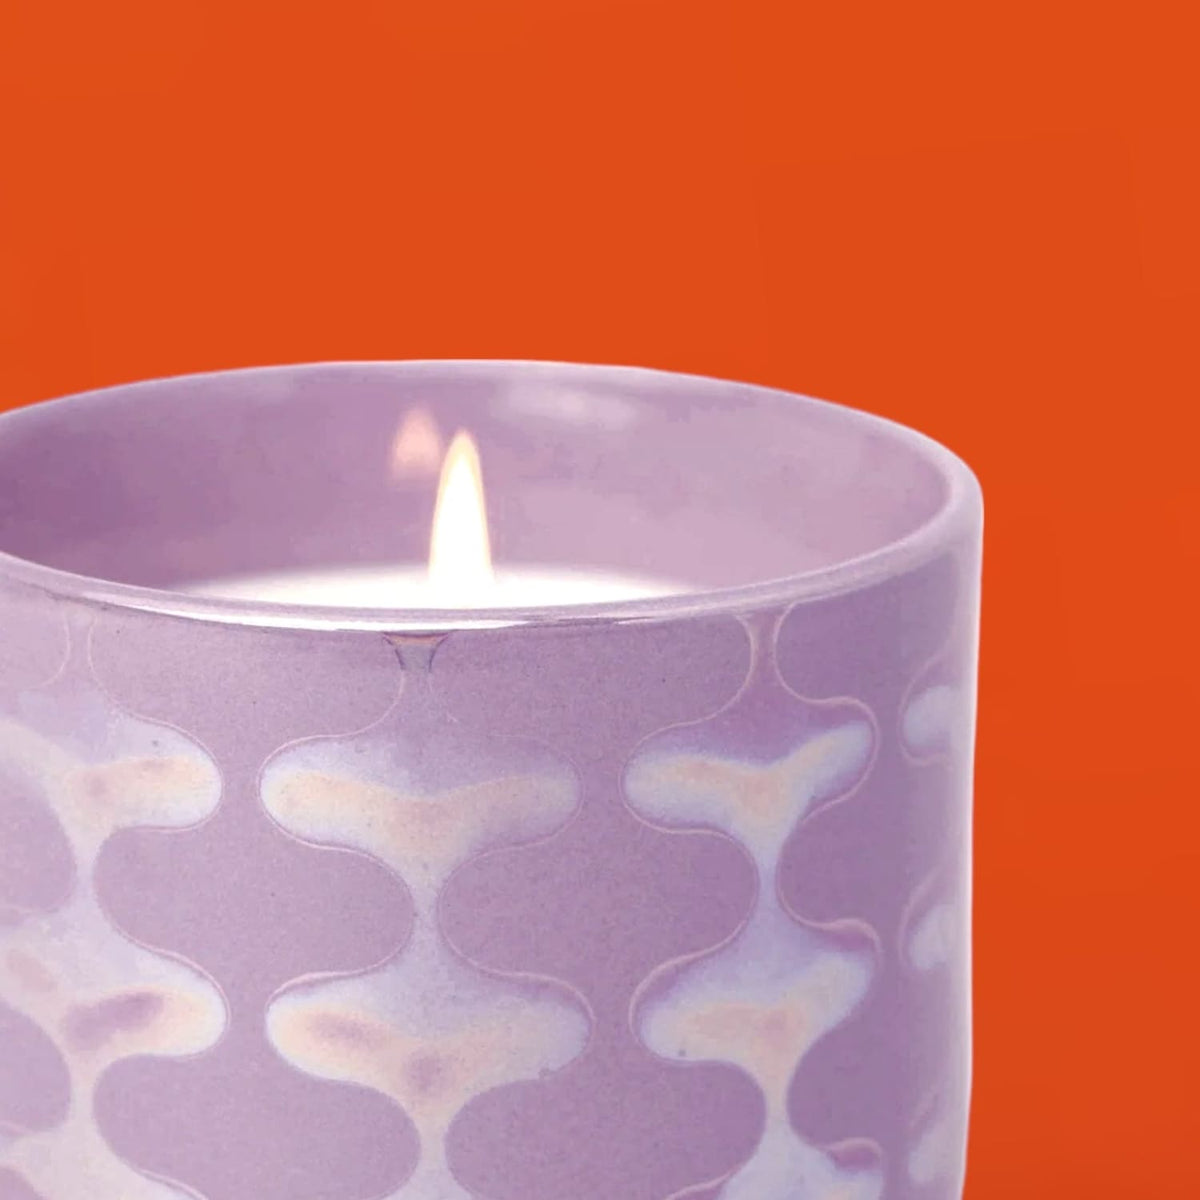 Lustre Ceramic Candle - Lavender Fern Candle - Web1123 -